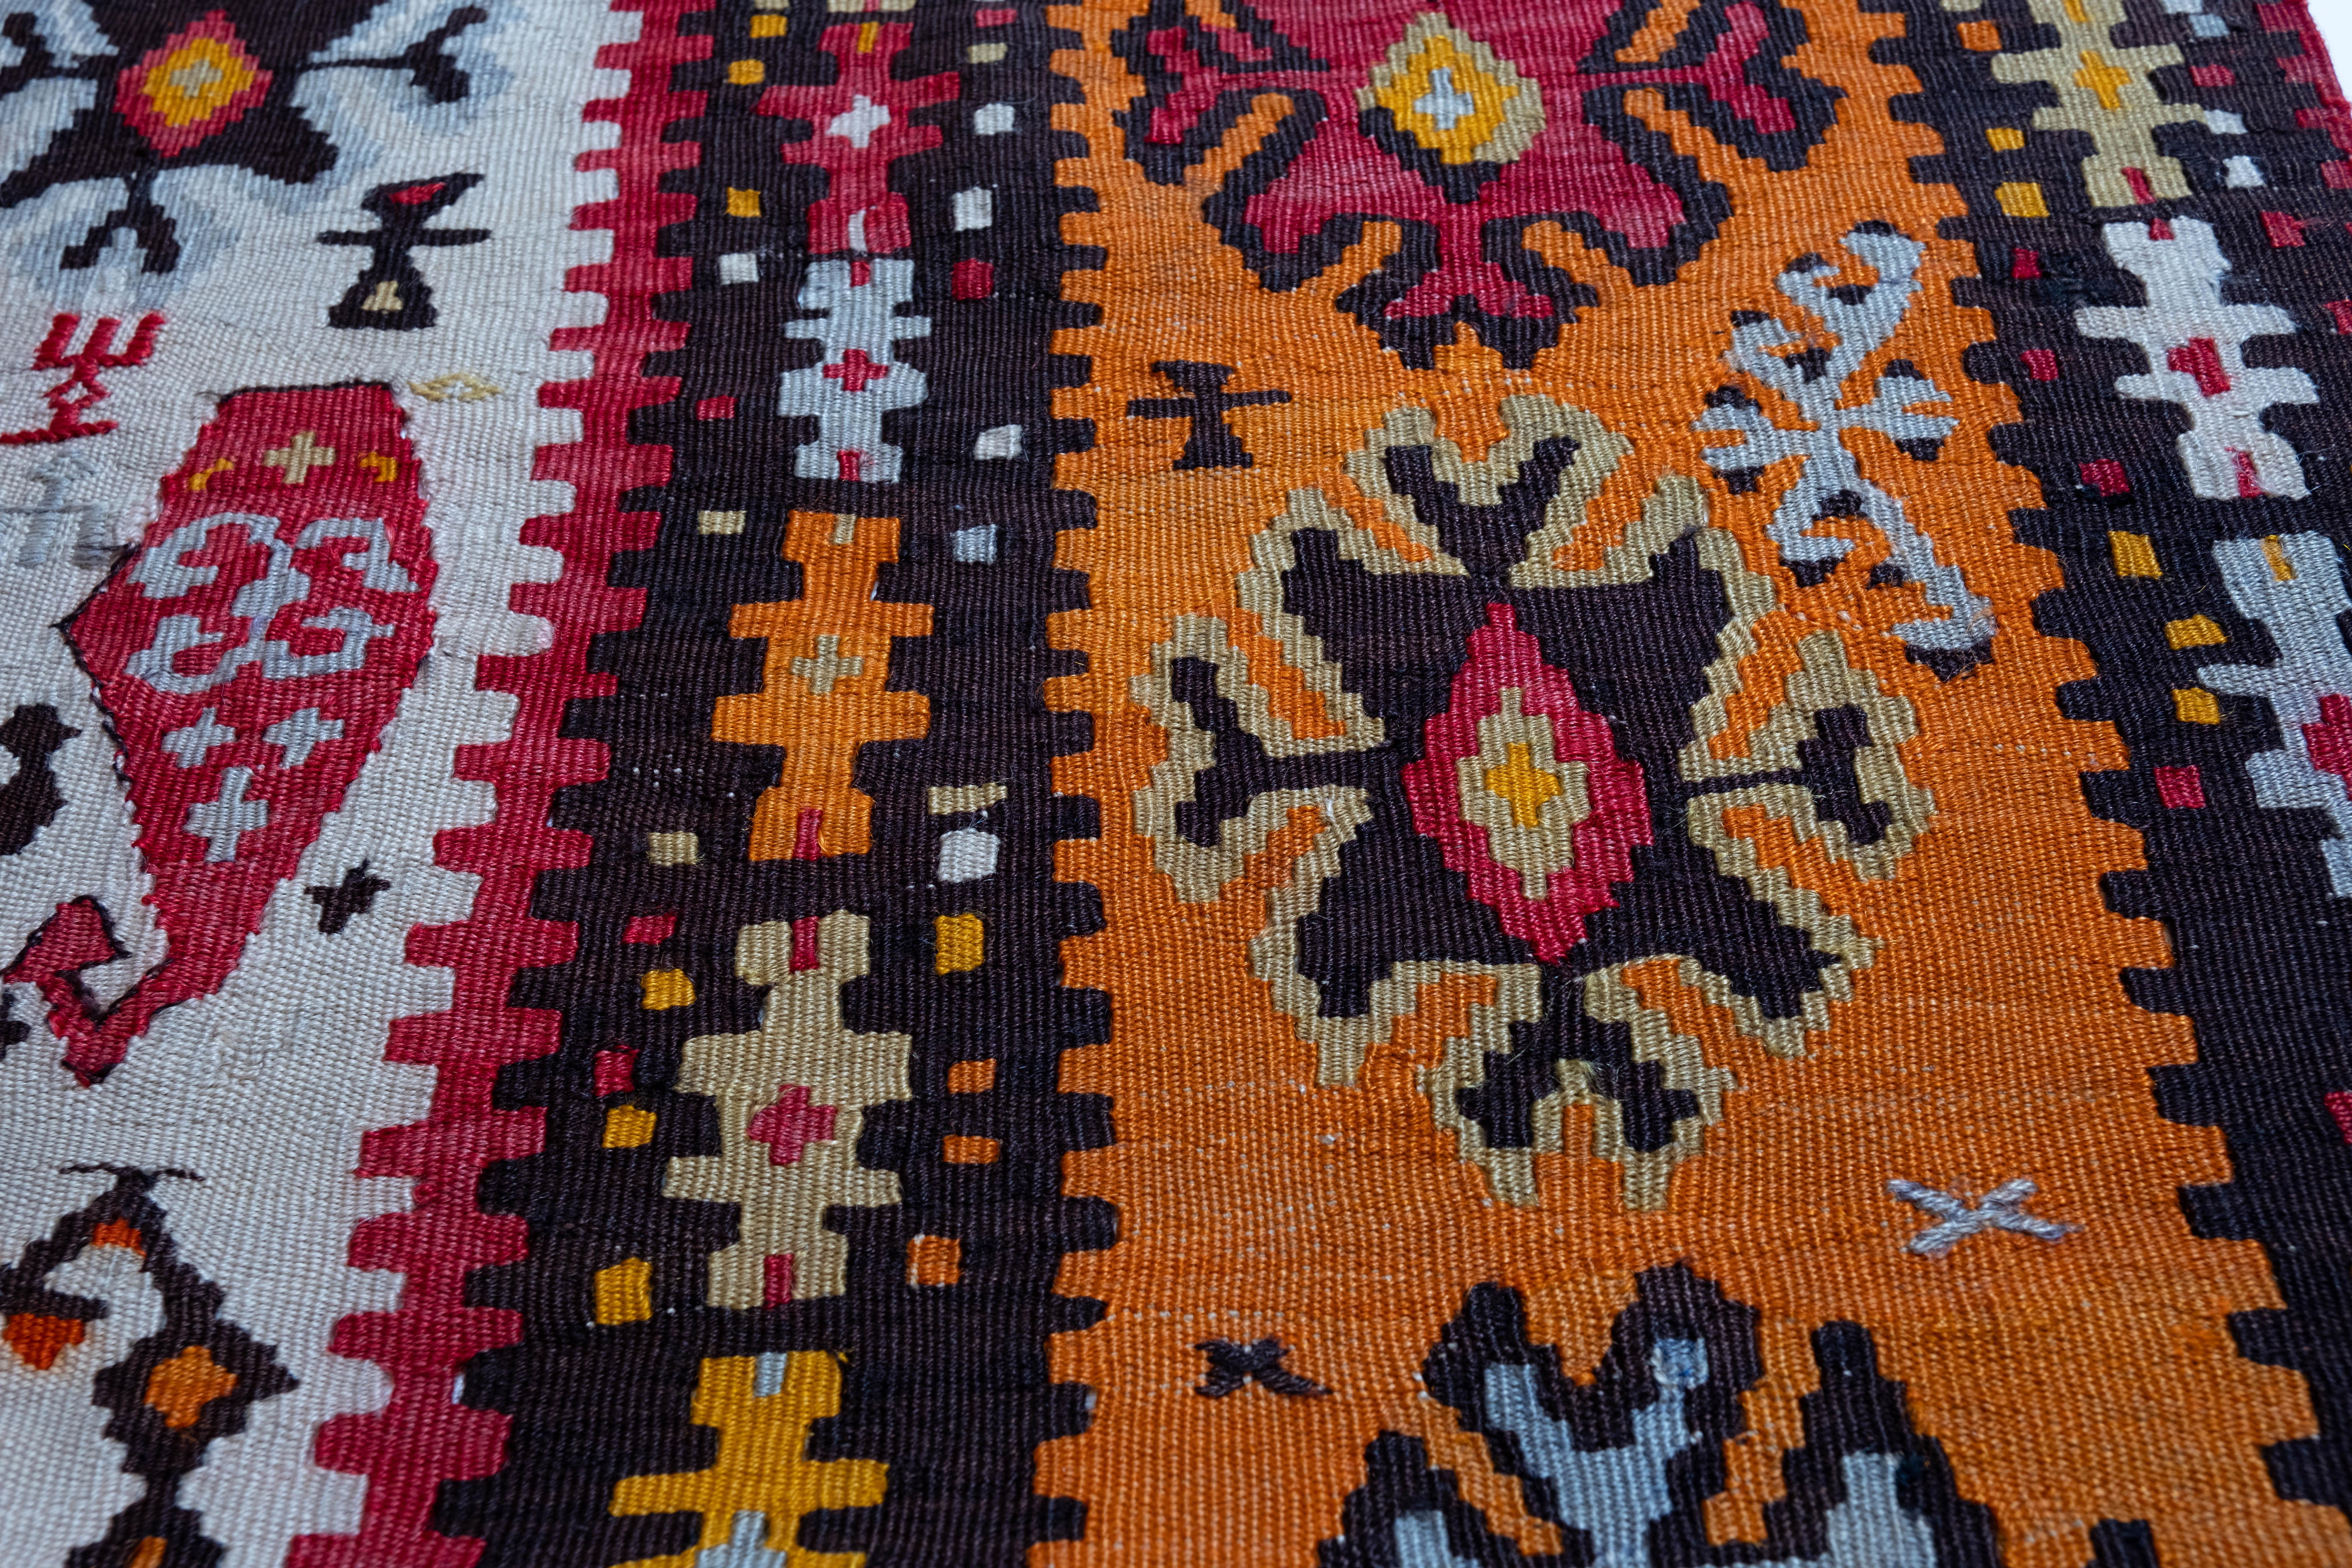 Hand-Woven Bayburt Kilim Rug Vintage Wool Old Eastern Anatolian Turkish Carpet For Sale